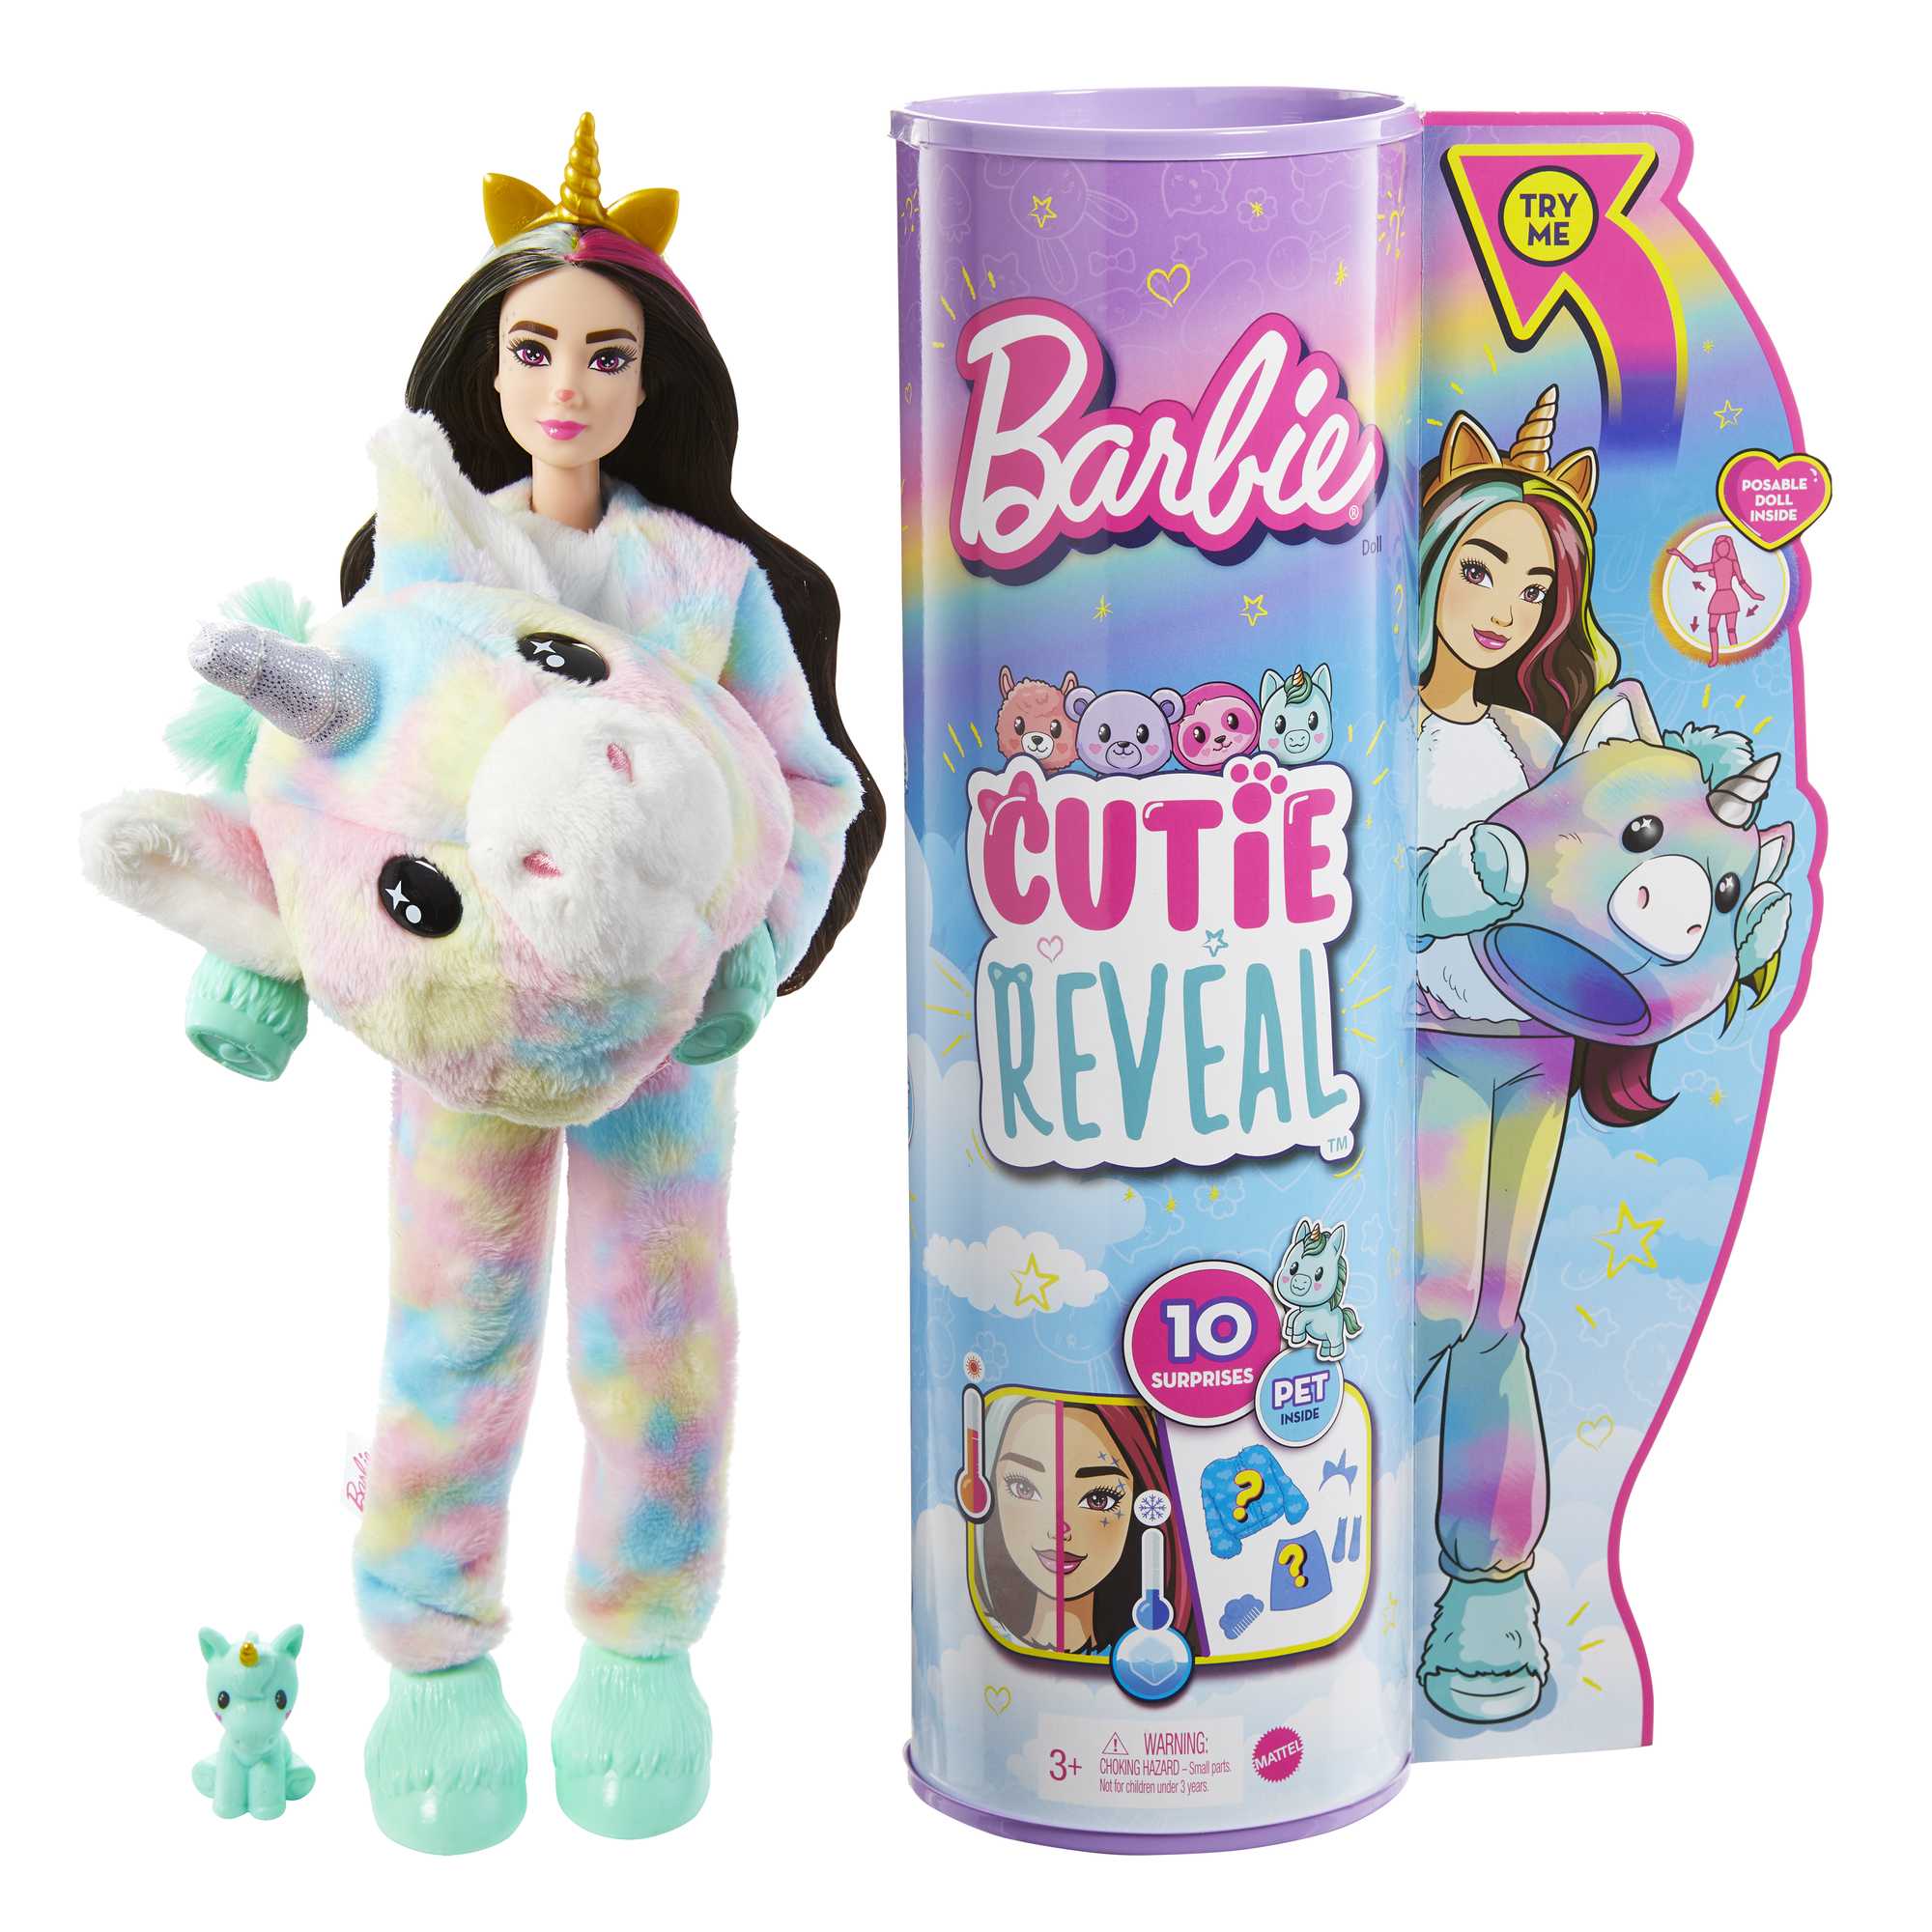 Barbie Doll, Cutie Reveal Owl Plush Costume Doll with 10 Surprises, Mini  Pet, Color Change and Accessories, Snowflake Sparkle